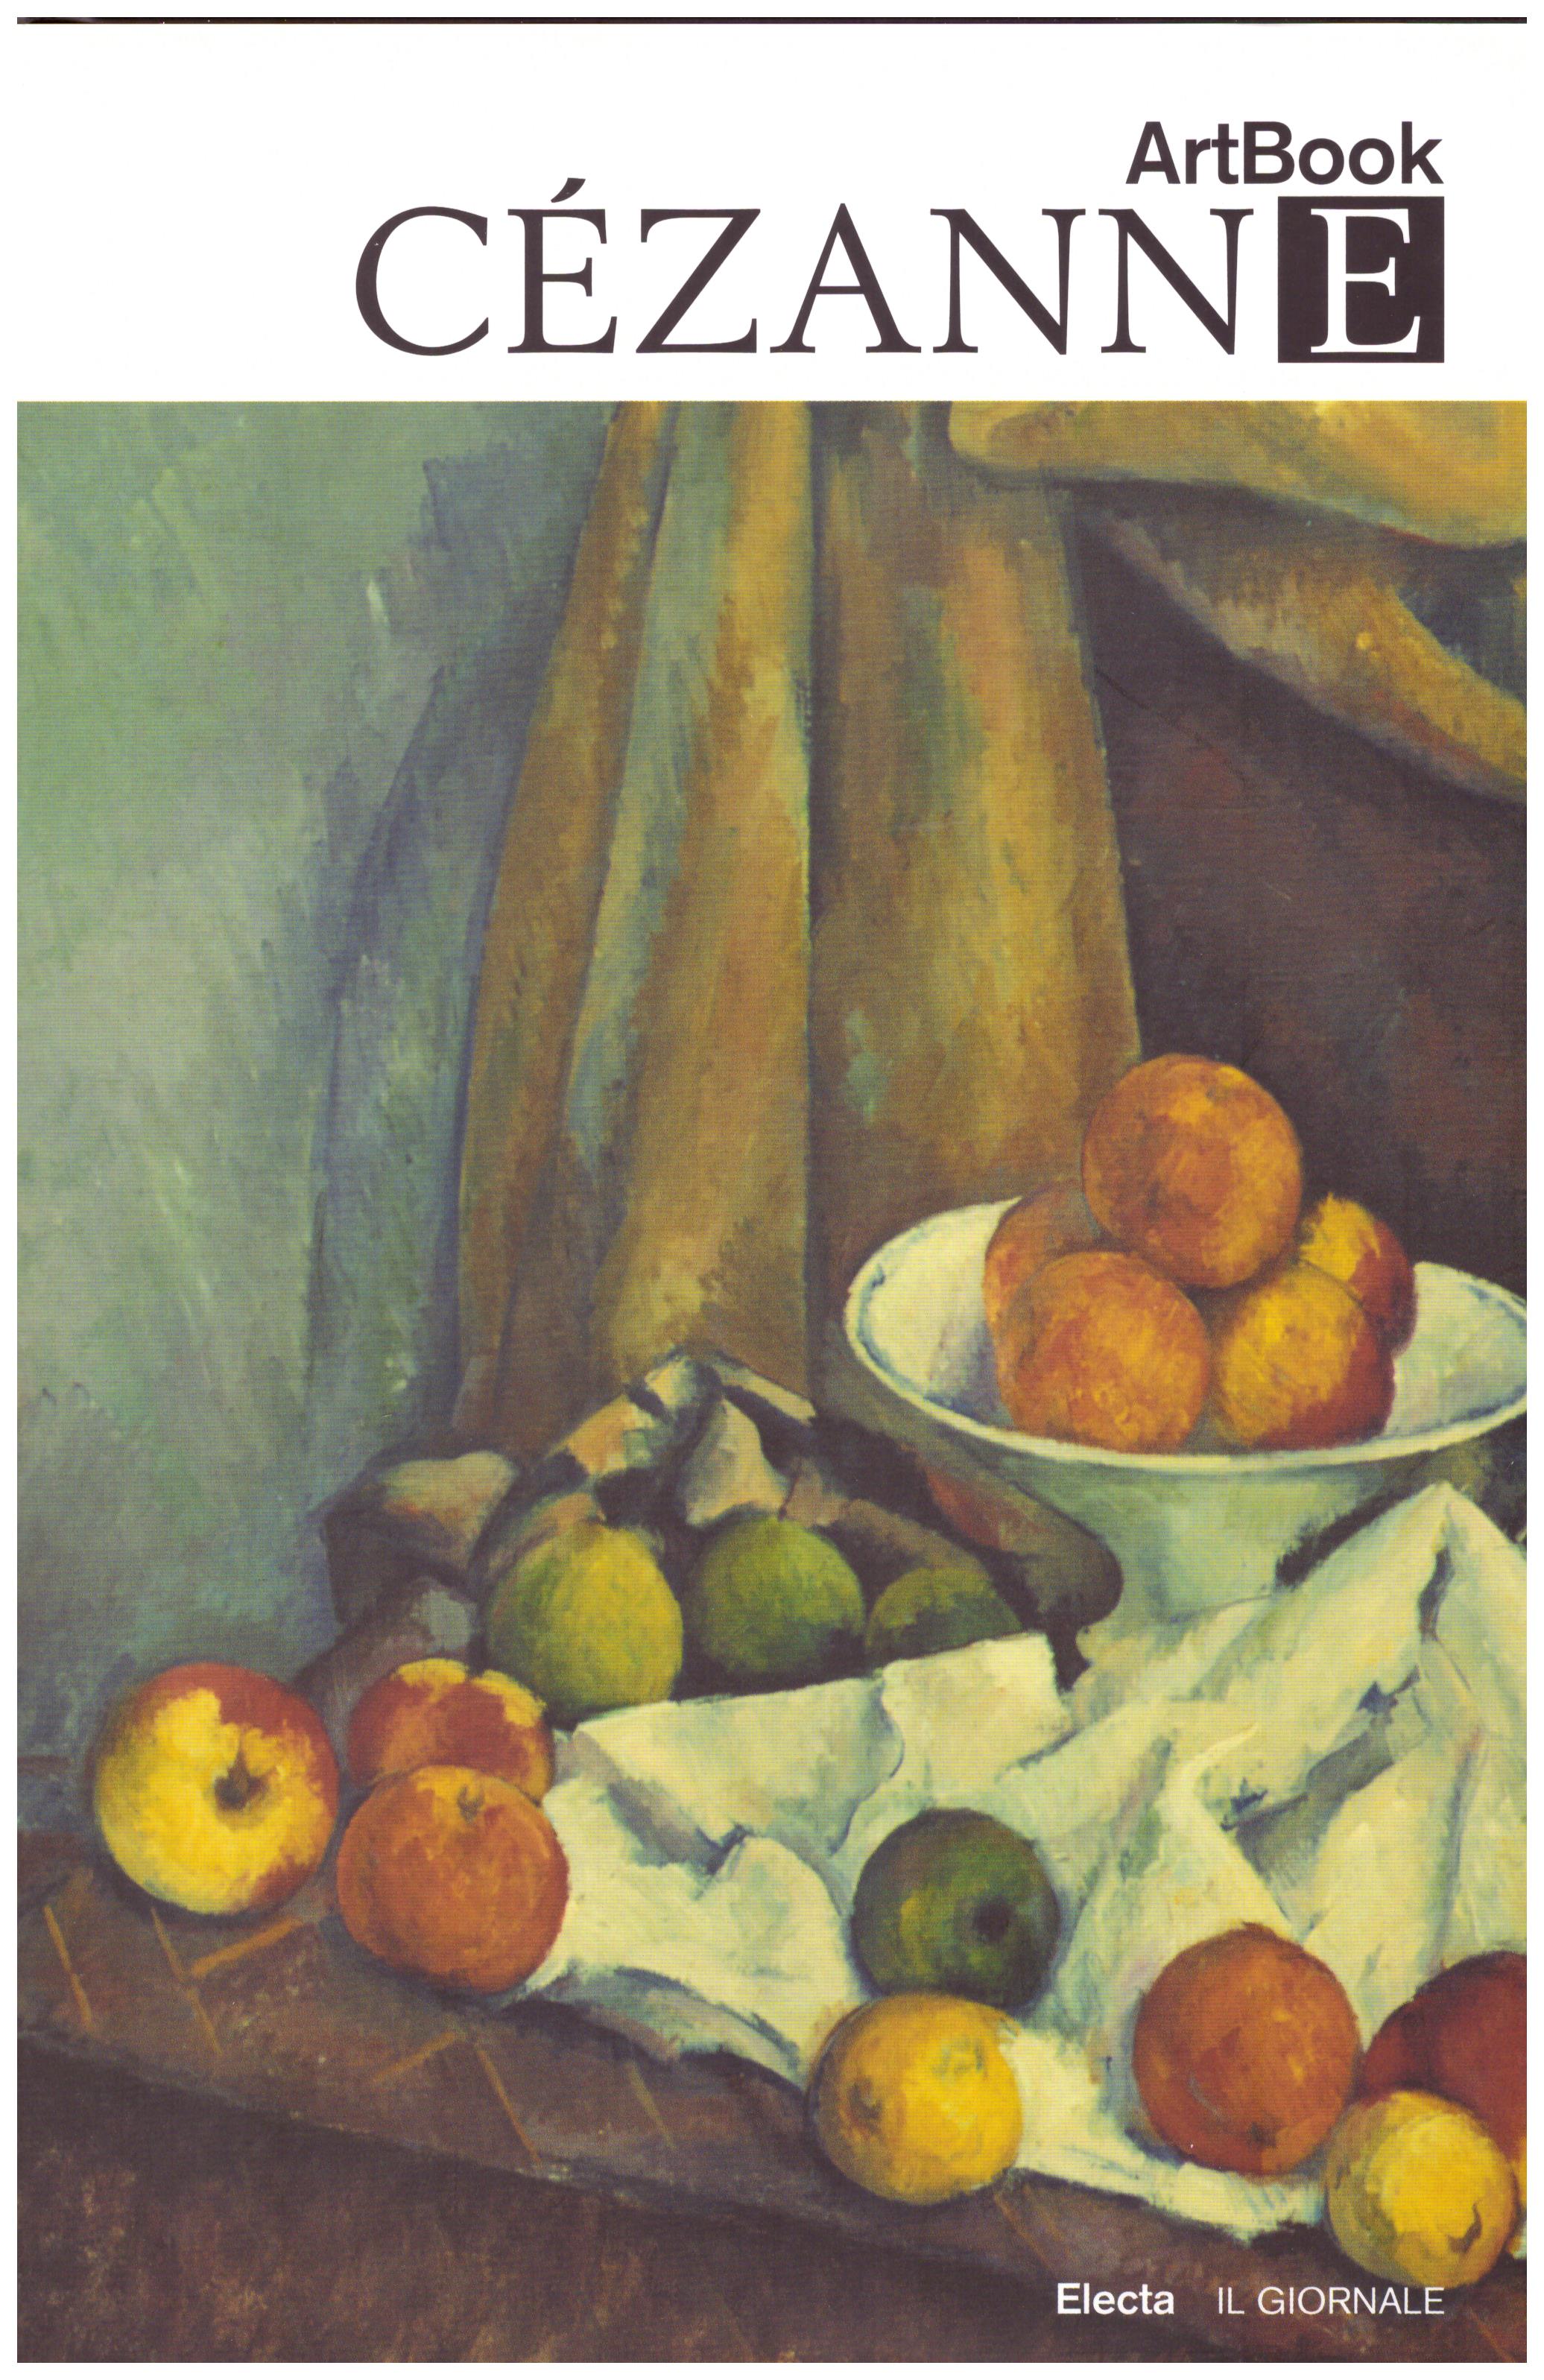 Cezanne. ArtBook. N. 14.